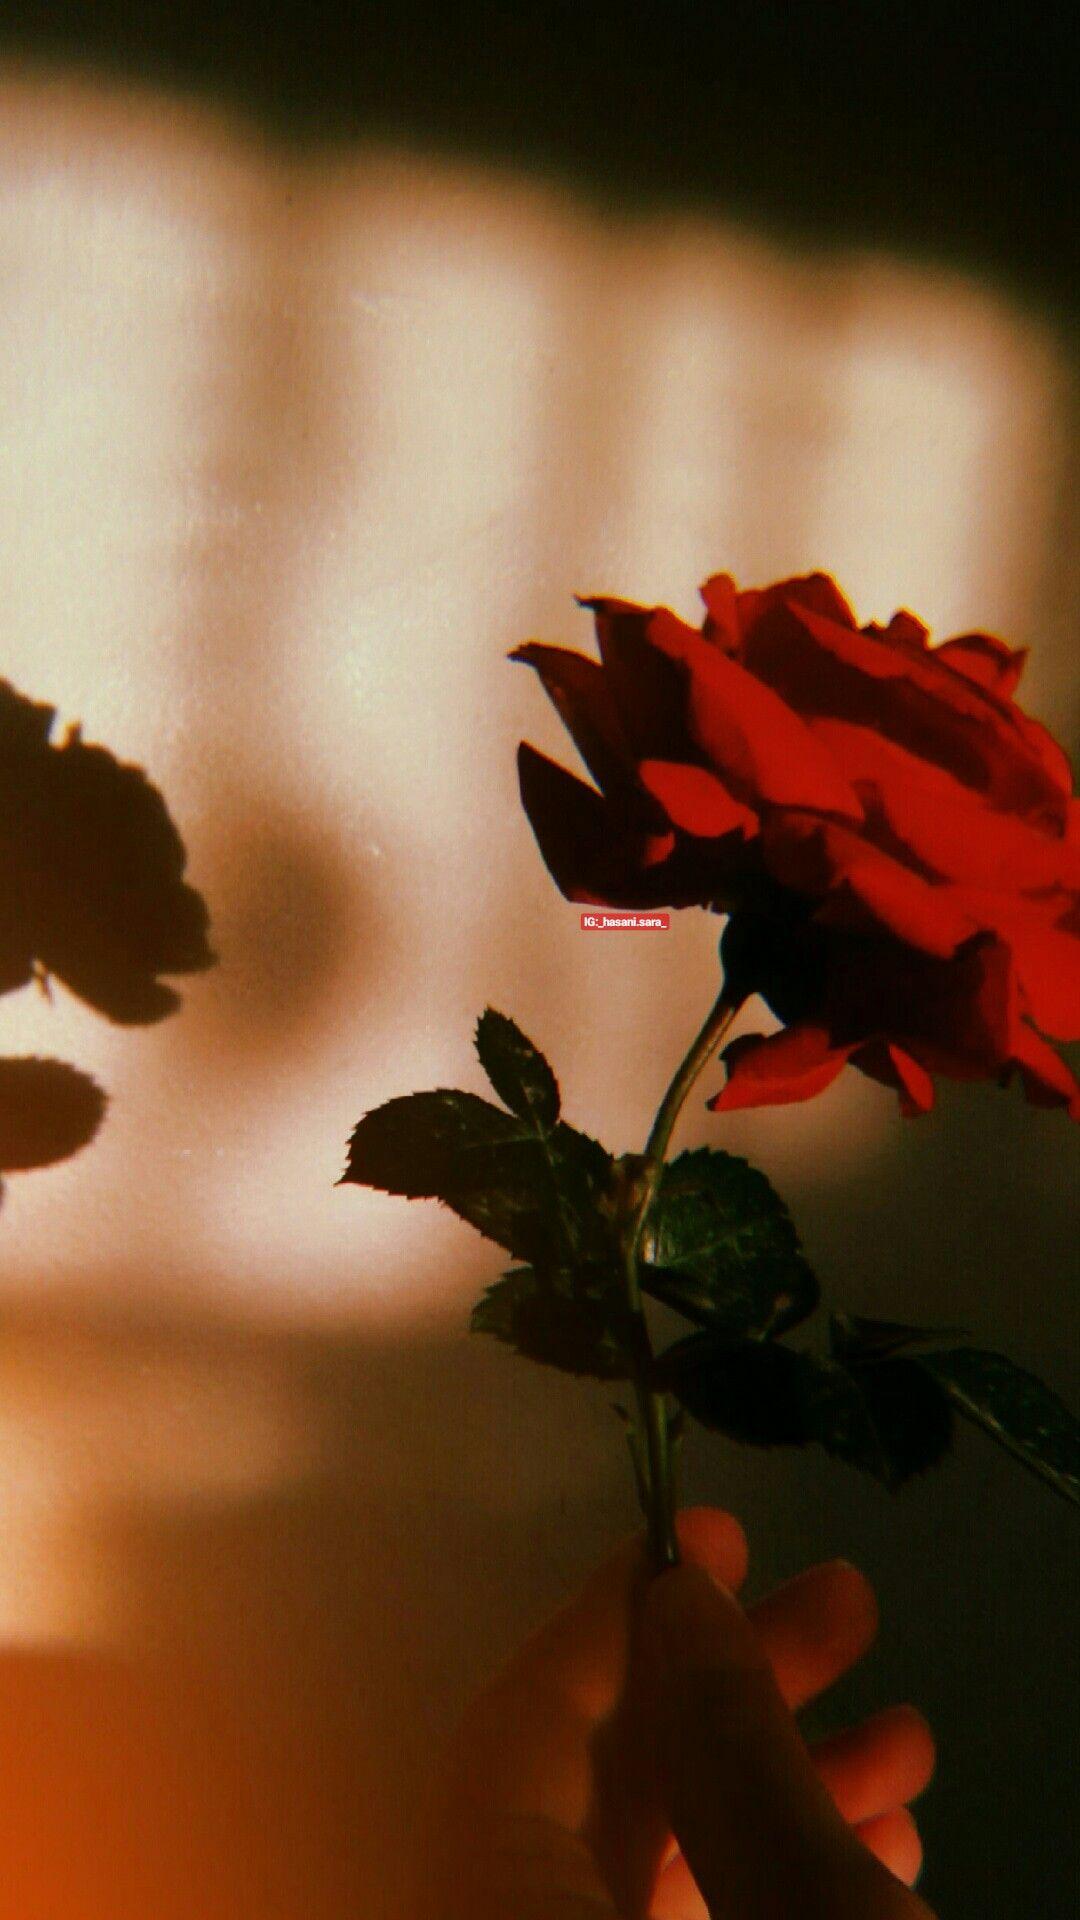 1080 x 1920 · jpeg - #red #rose #aesthetic #hand #flower | Aesthetic art, Red roses, Red ...